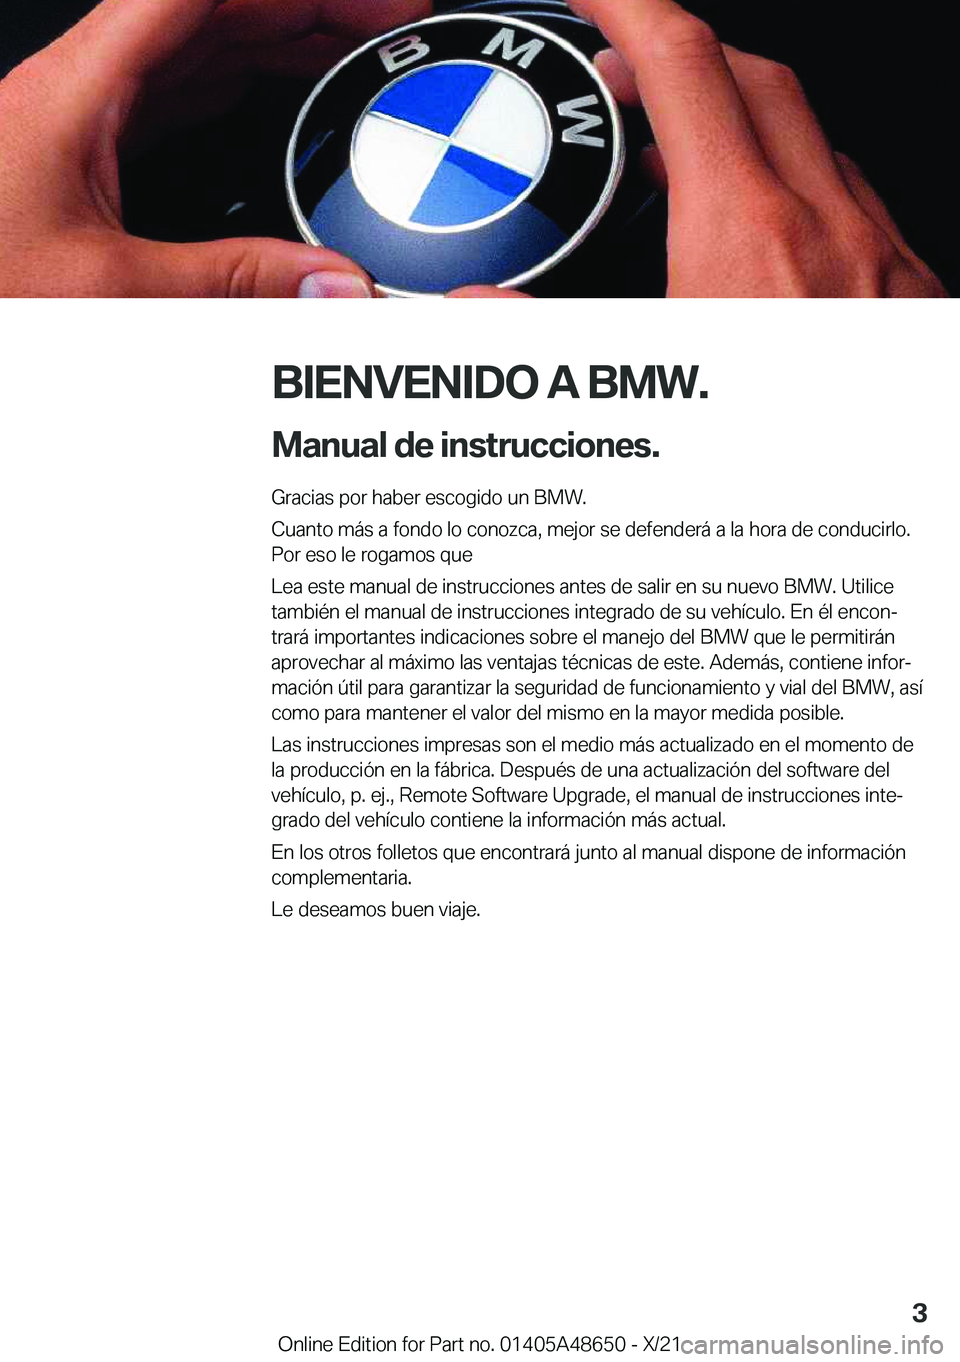 BMW 3 SERIES 2022  Manuales de Empleo (in Spanish) �B�I�E�N�V�E�N�I�D�O��A��B�M�W�.
�M�a�n�u�a�l��d�e��i�n�s�t�r�u�c�c�i�o�n�e�s�. �G�r�a�c�i�a�s��p�o�r��h�a�b�e�r��e�s�c�o�g�i�d�o��u�n��B�M�W�.
�C�u�a�n�t�o��m�